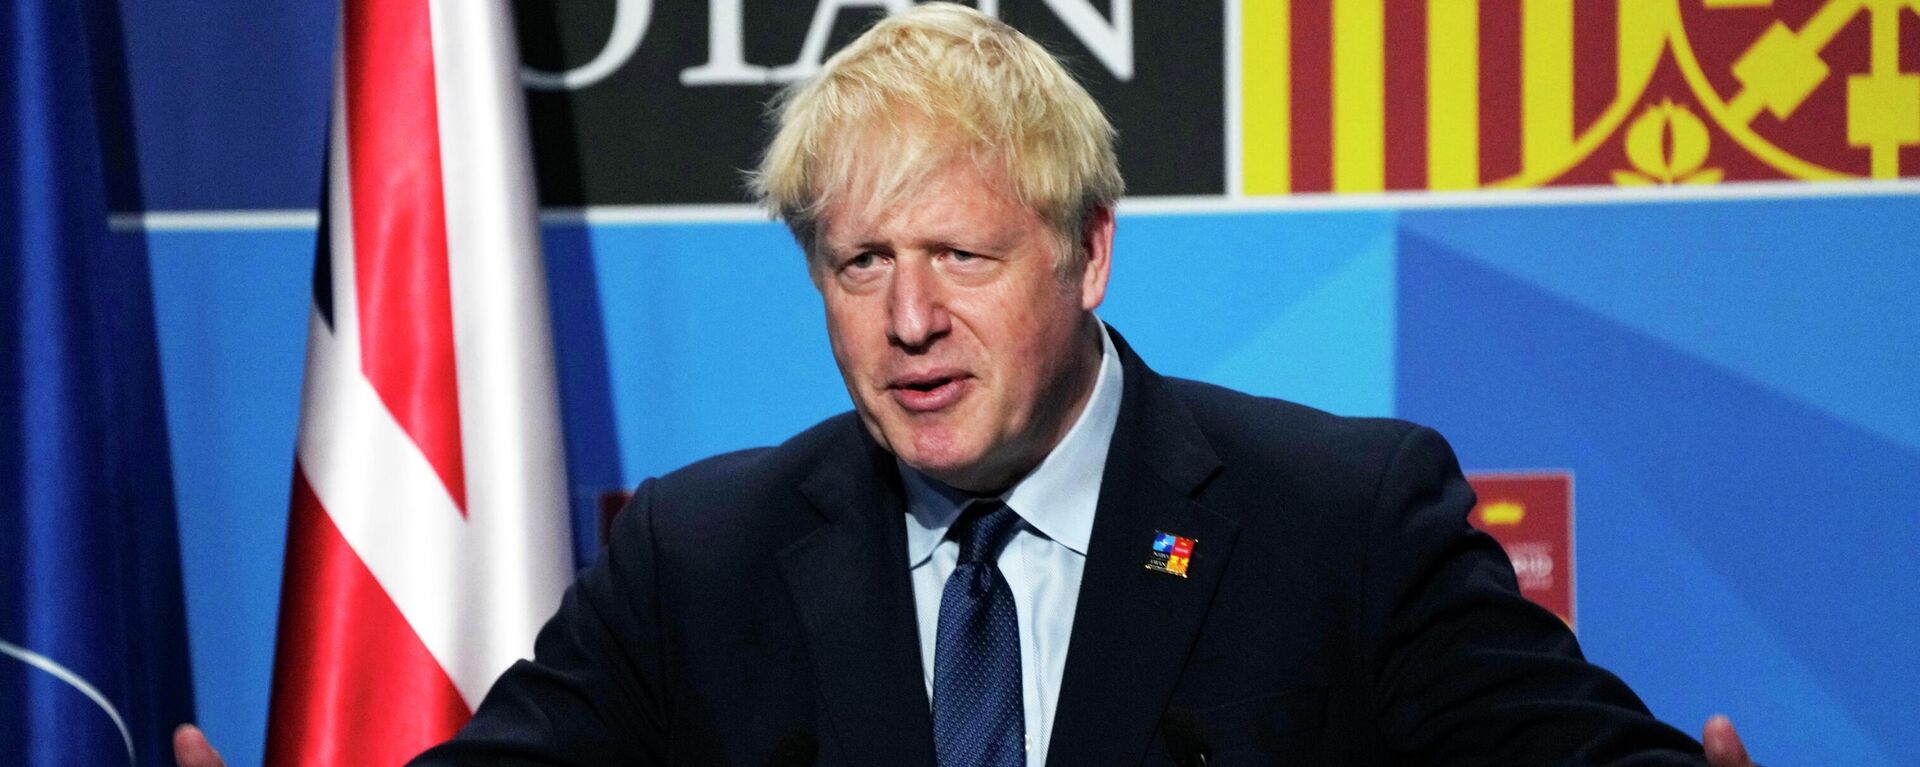 British Prime Minister Boris Johnson speaks during a media conference at a NATO summit in Madrid, Spain on Thursday, June 30, 2022 - Sputnik International, 1920, 27.07.2022